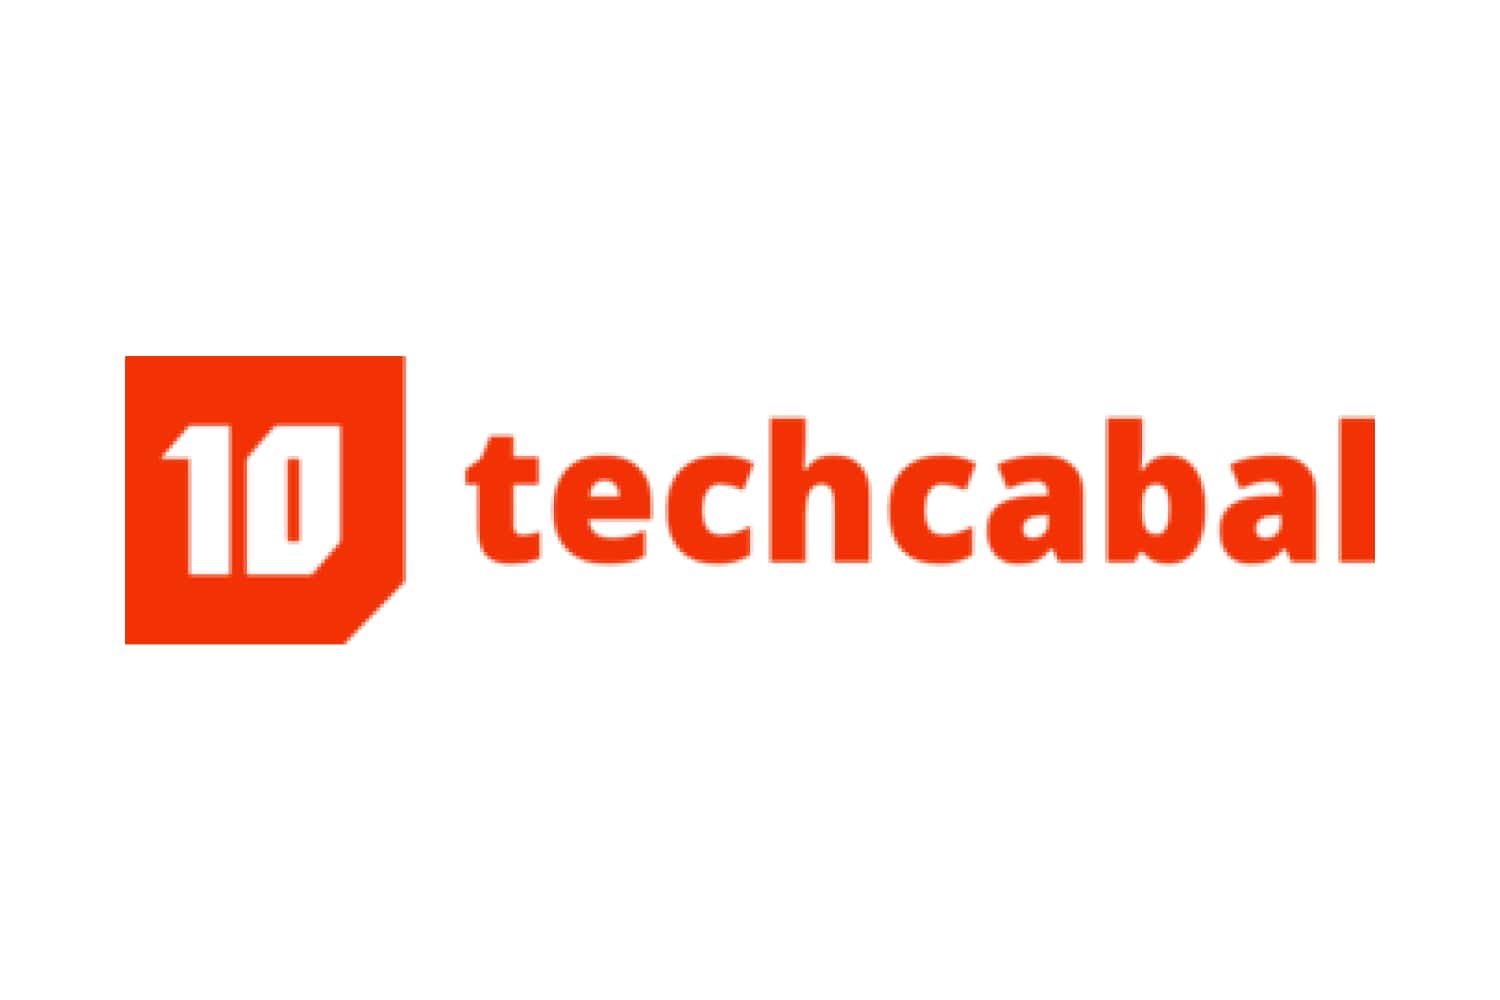 TechCabal logo